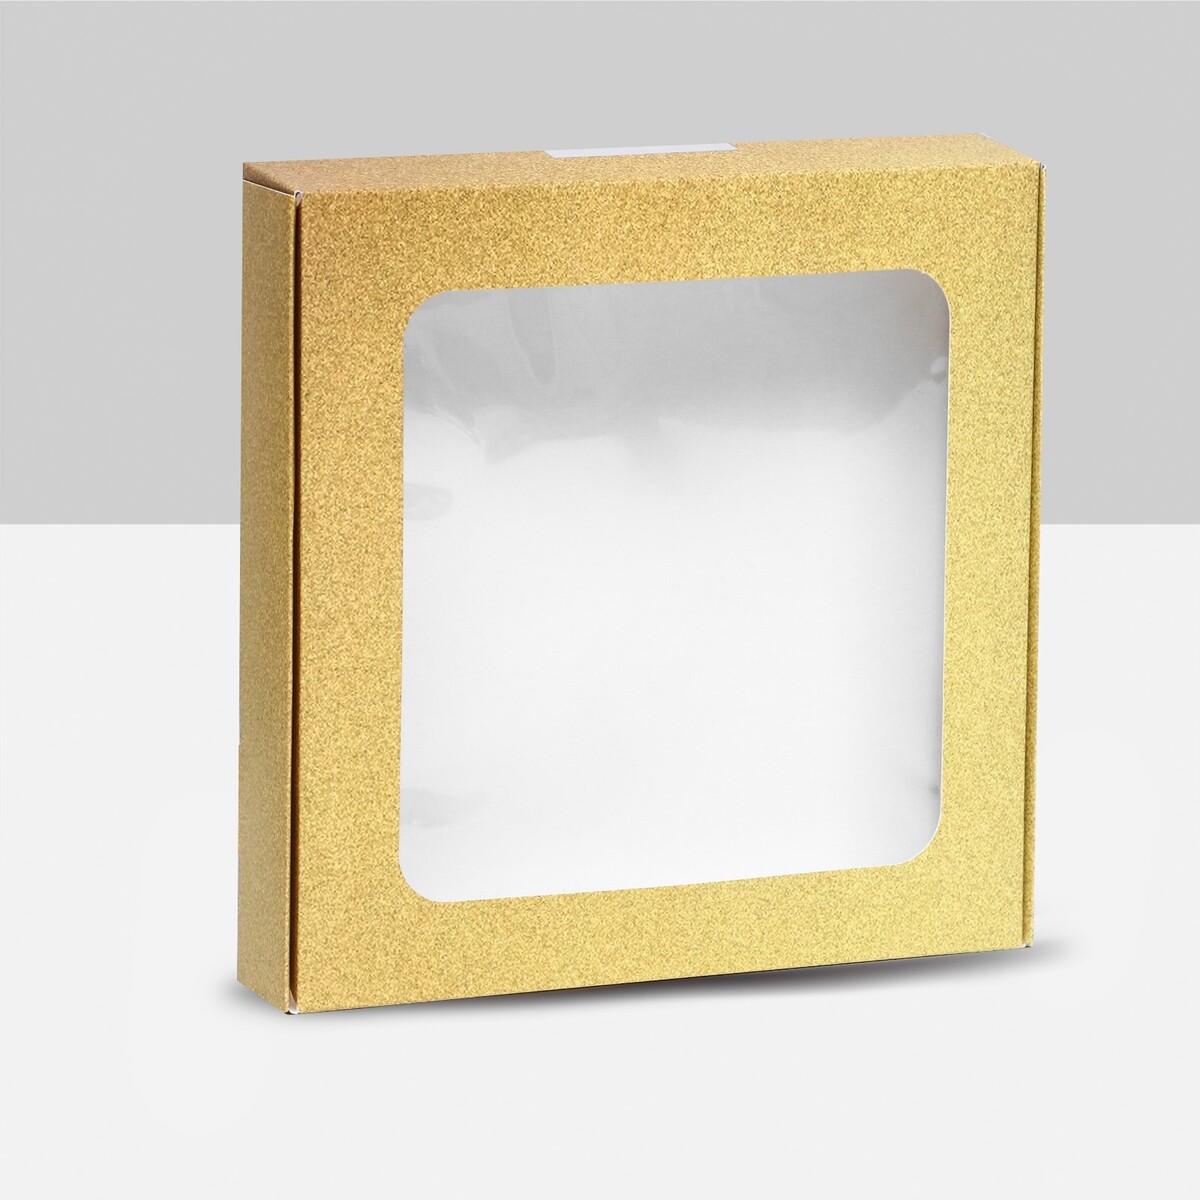 Коробка самосборная, с окном, золотая, 16 х 16 х 3 см коробка самосборная с окном мятная 13 х 13 х 3 см